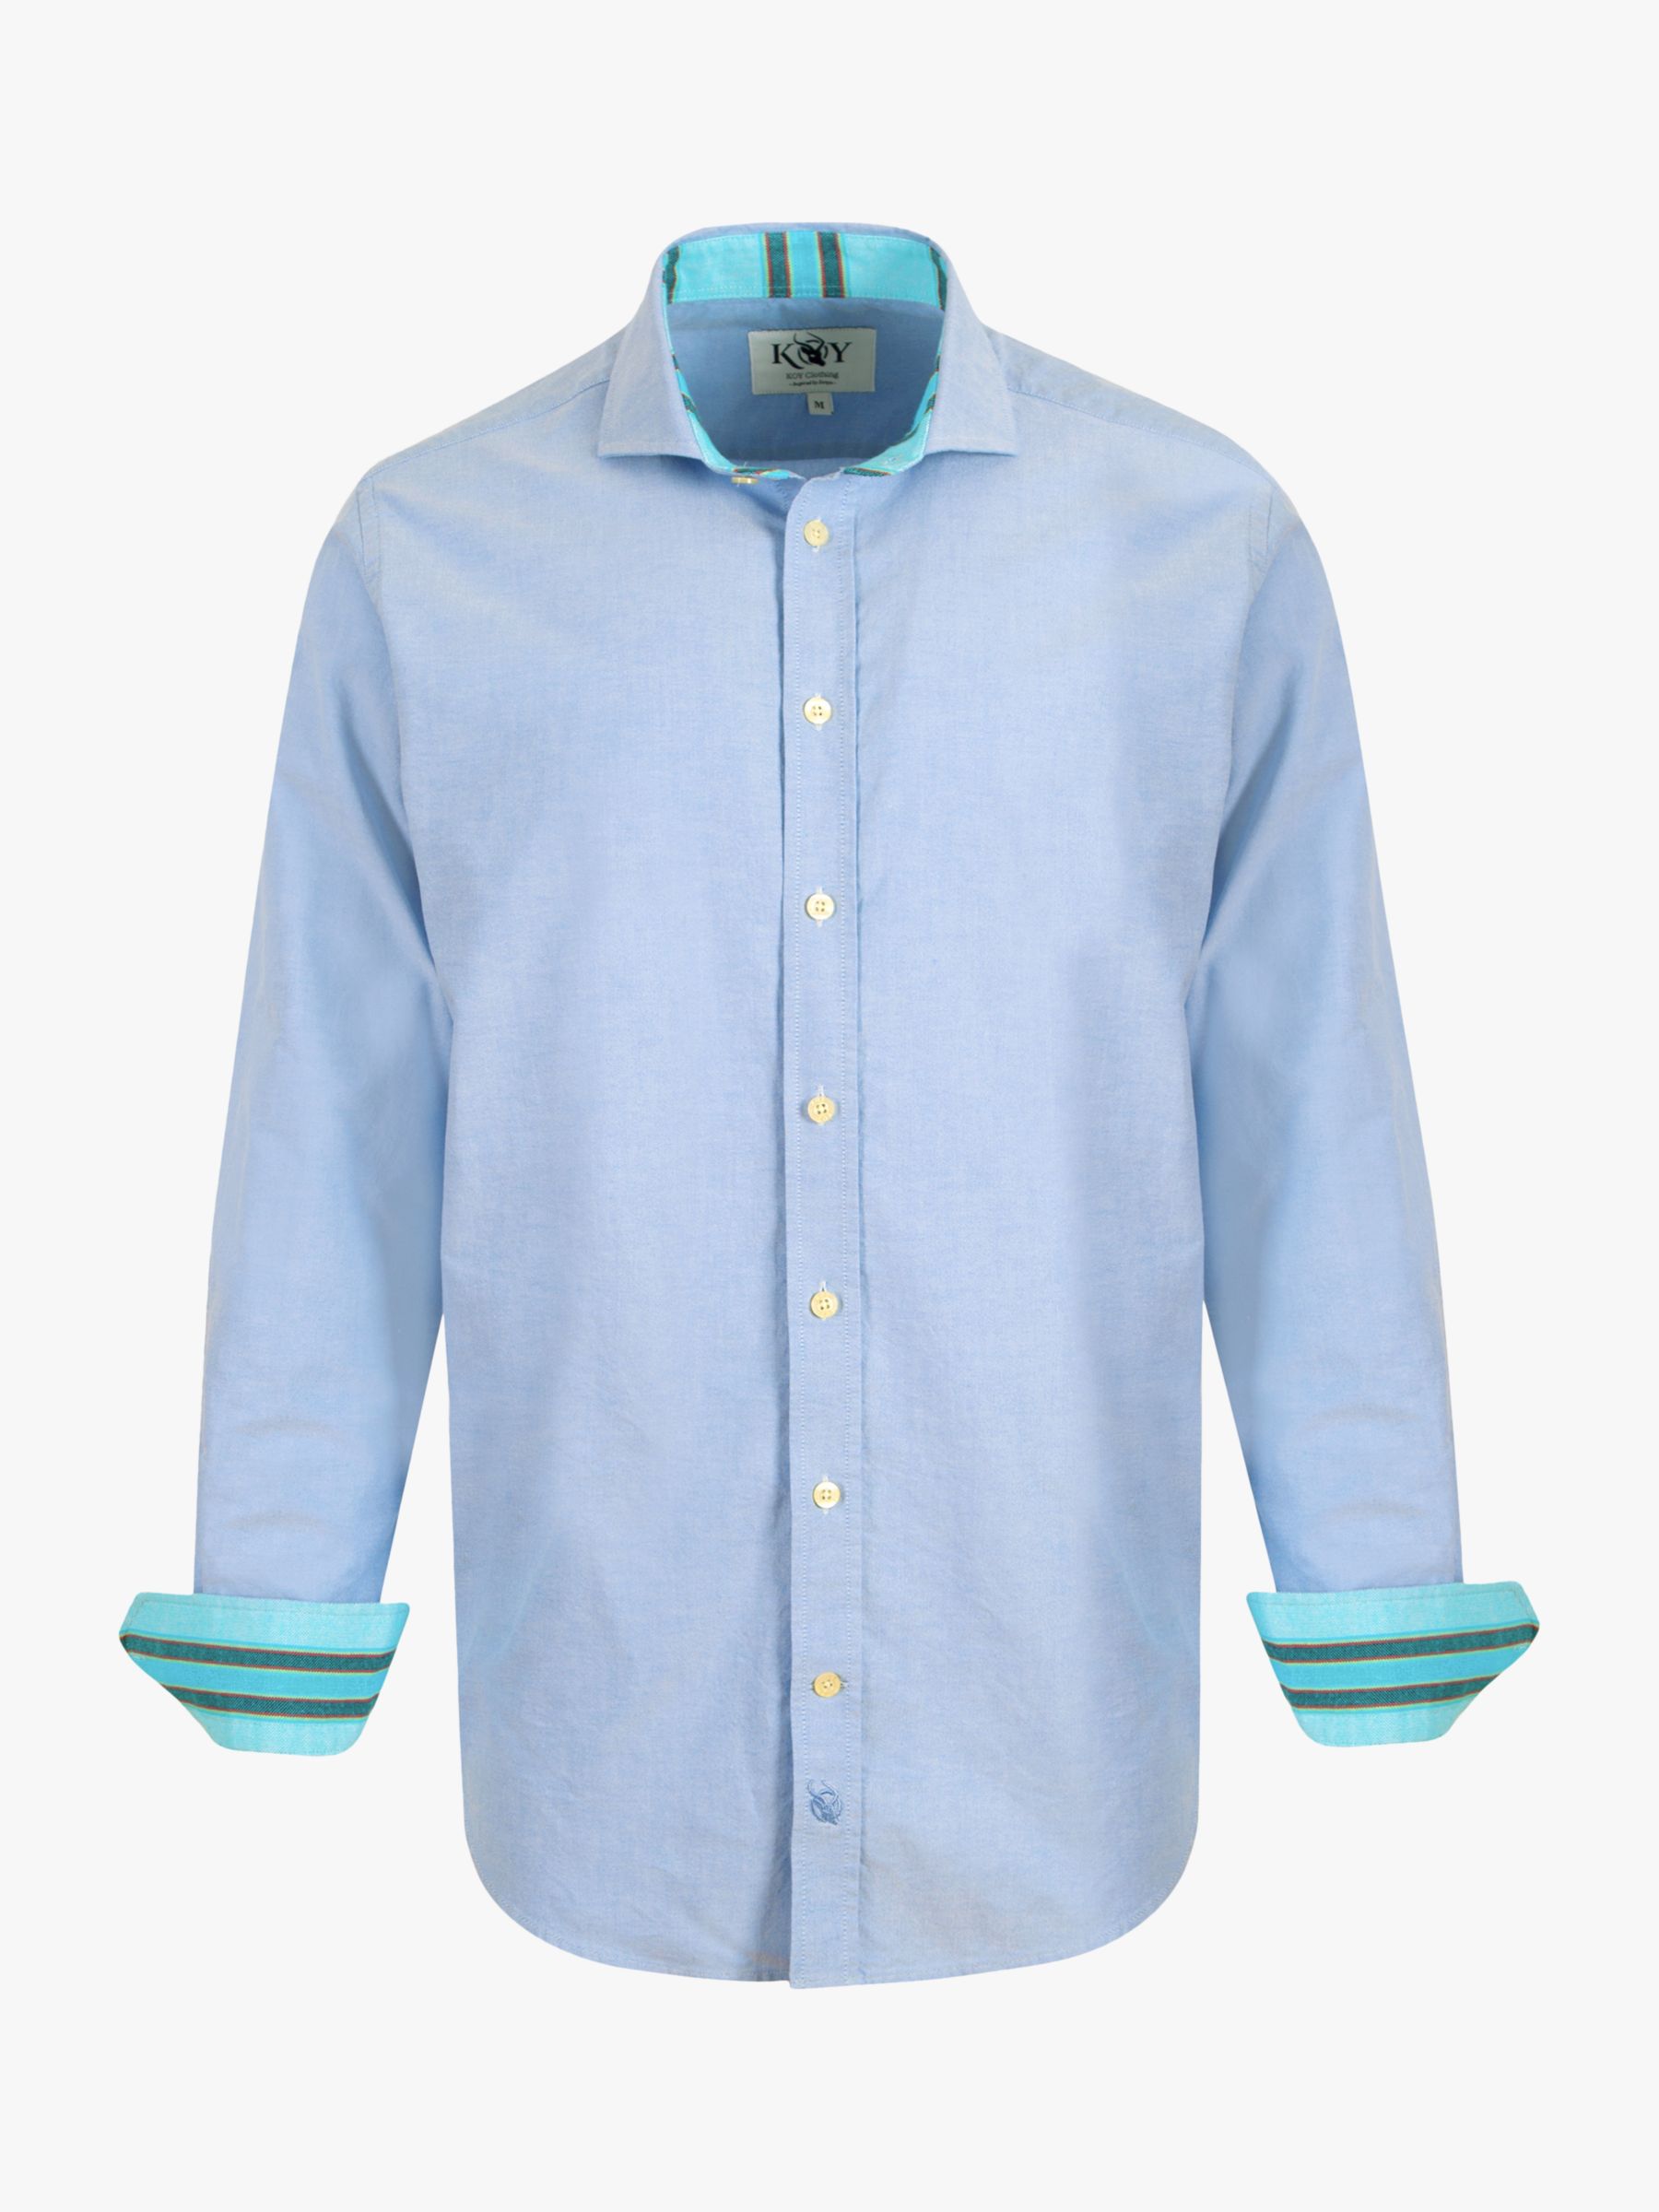 Buy KOY Oxford Cotton Shirt, Blue Mid Online at johnlewis.com